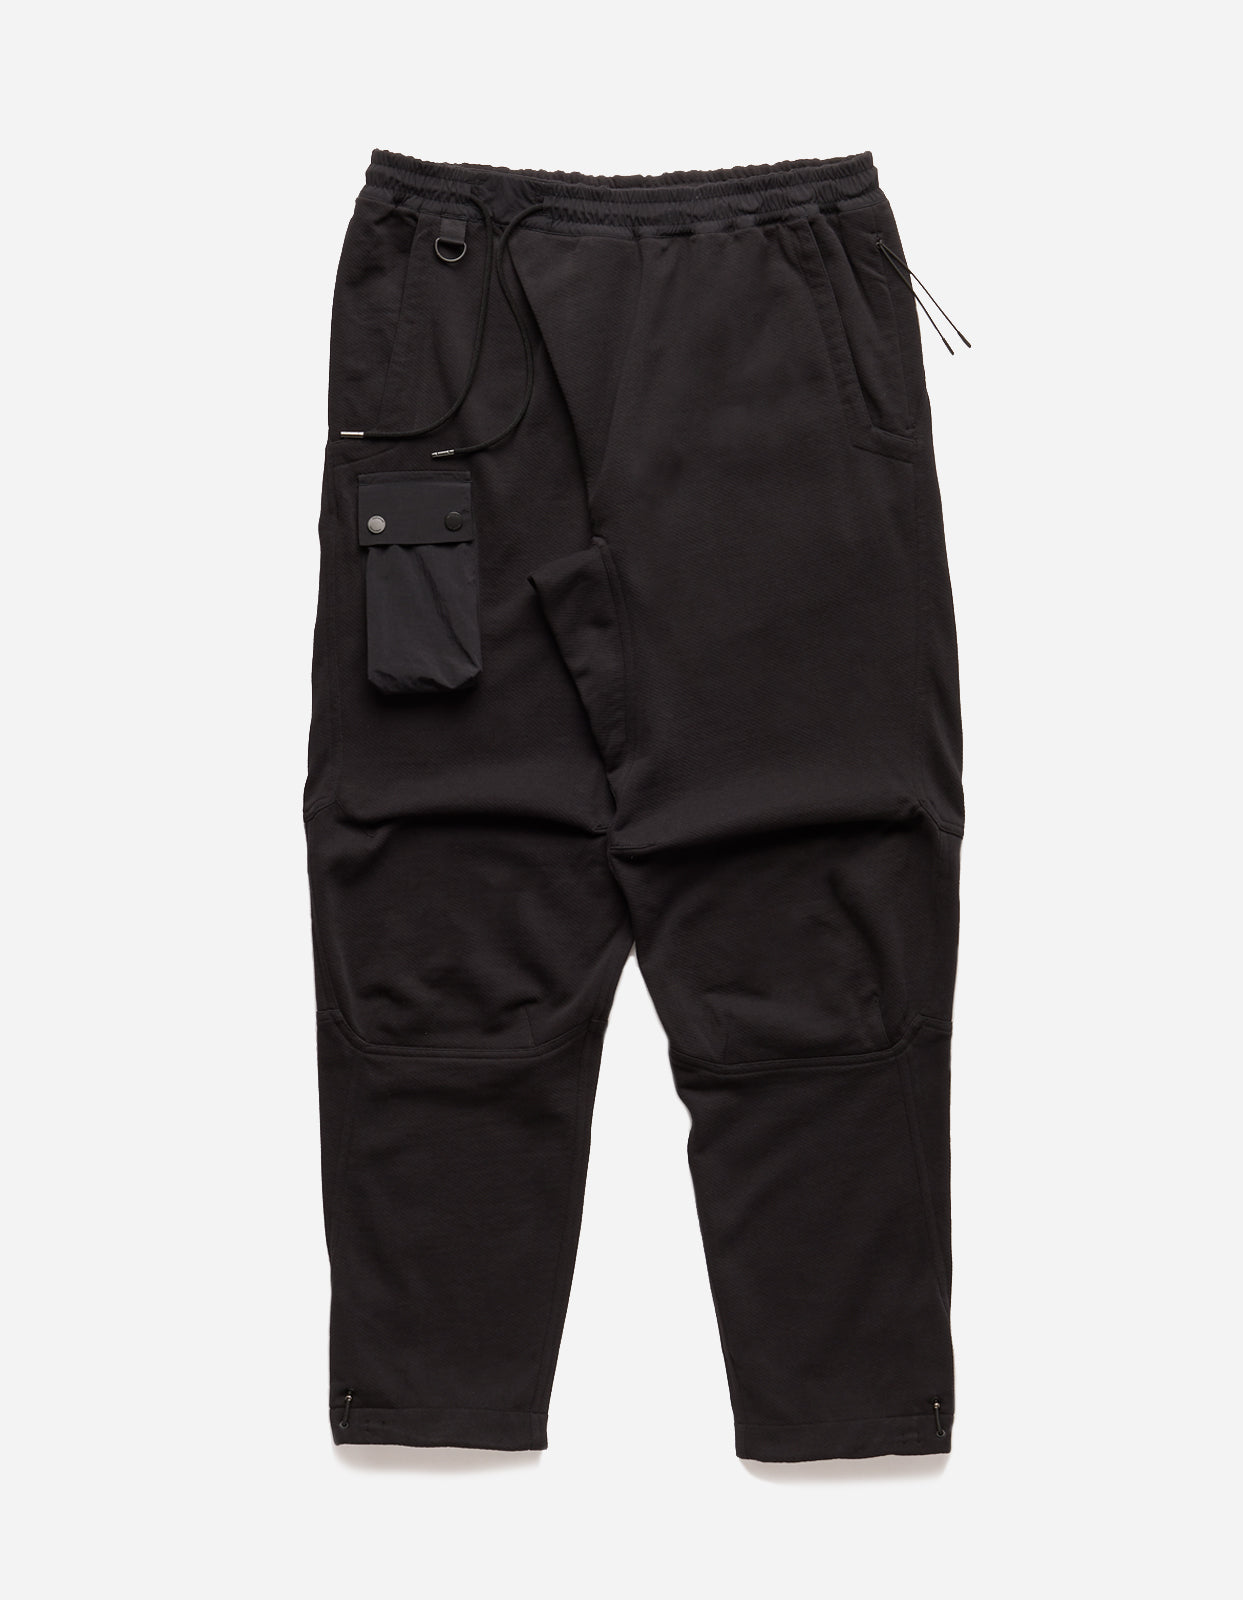 5044 Asym Articulated Sweatpants Black